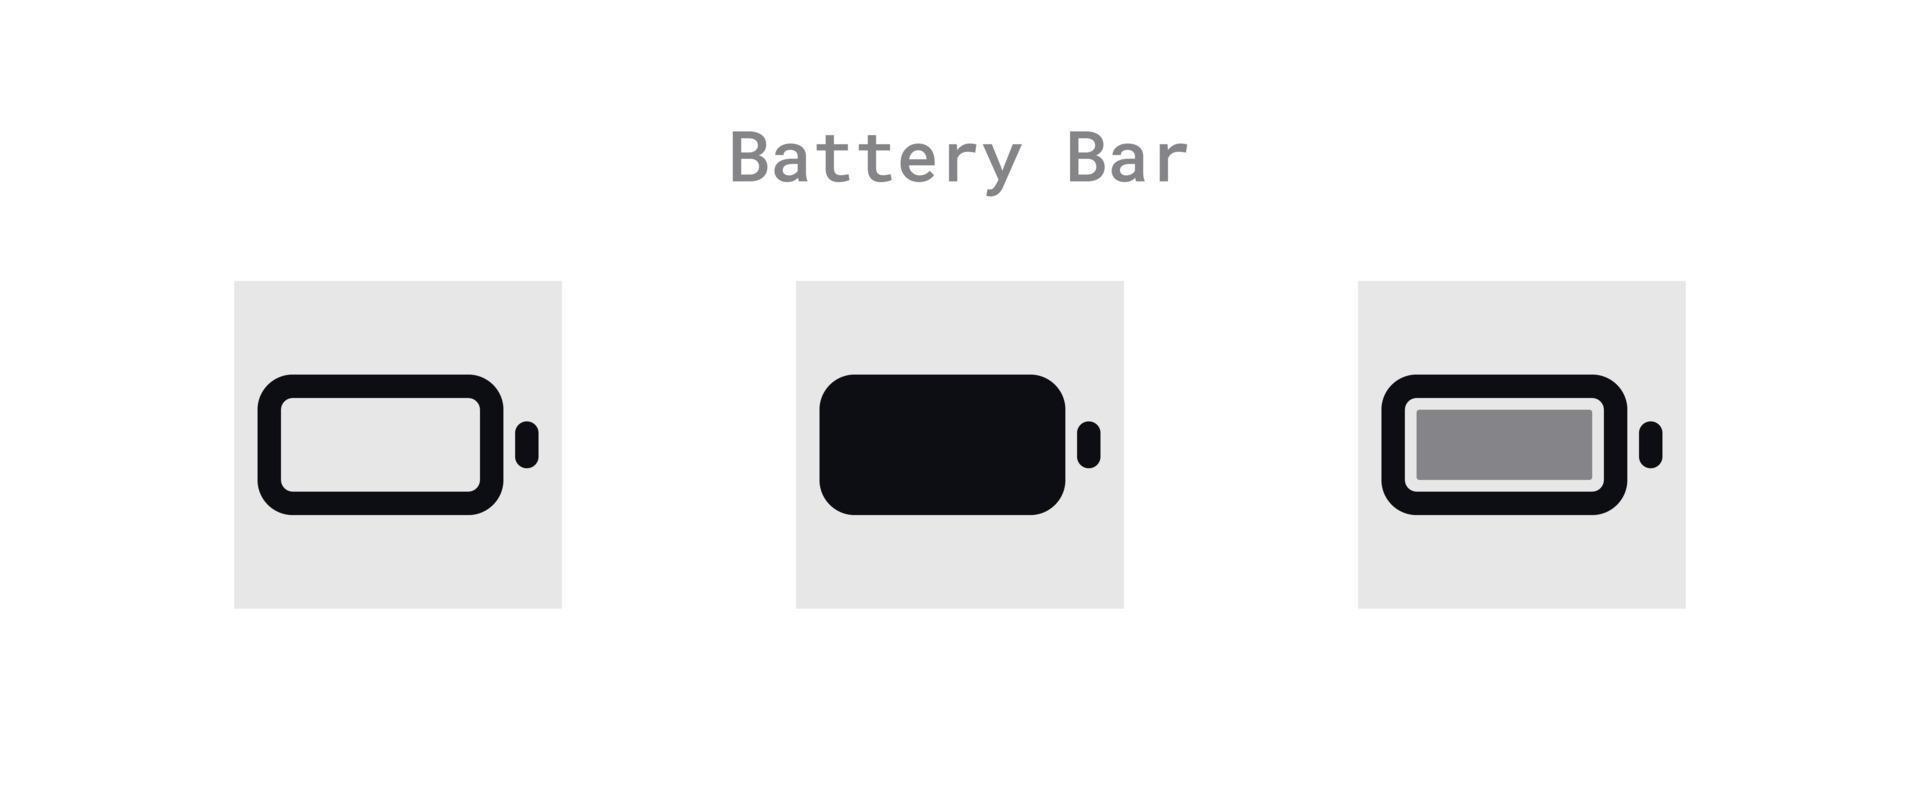 Battery Status Icons Sheet vector